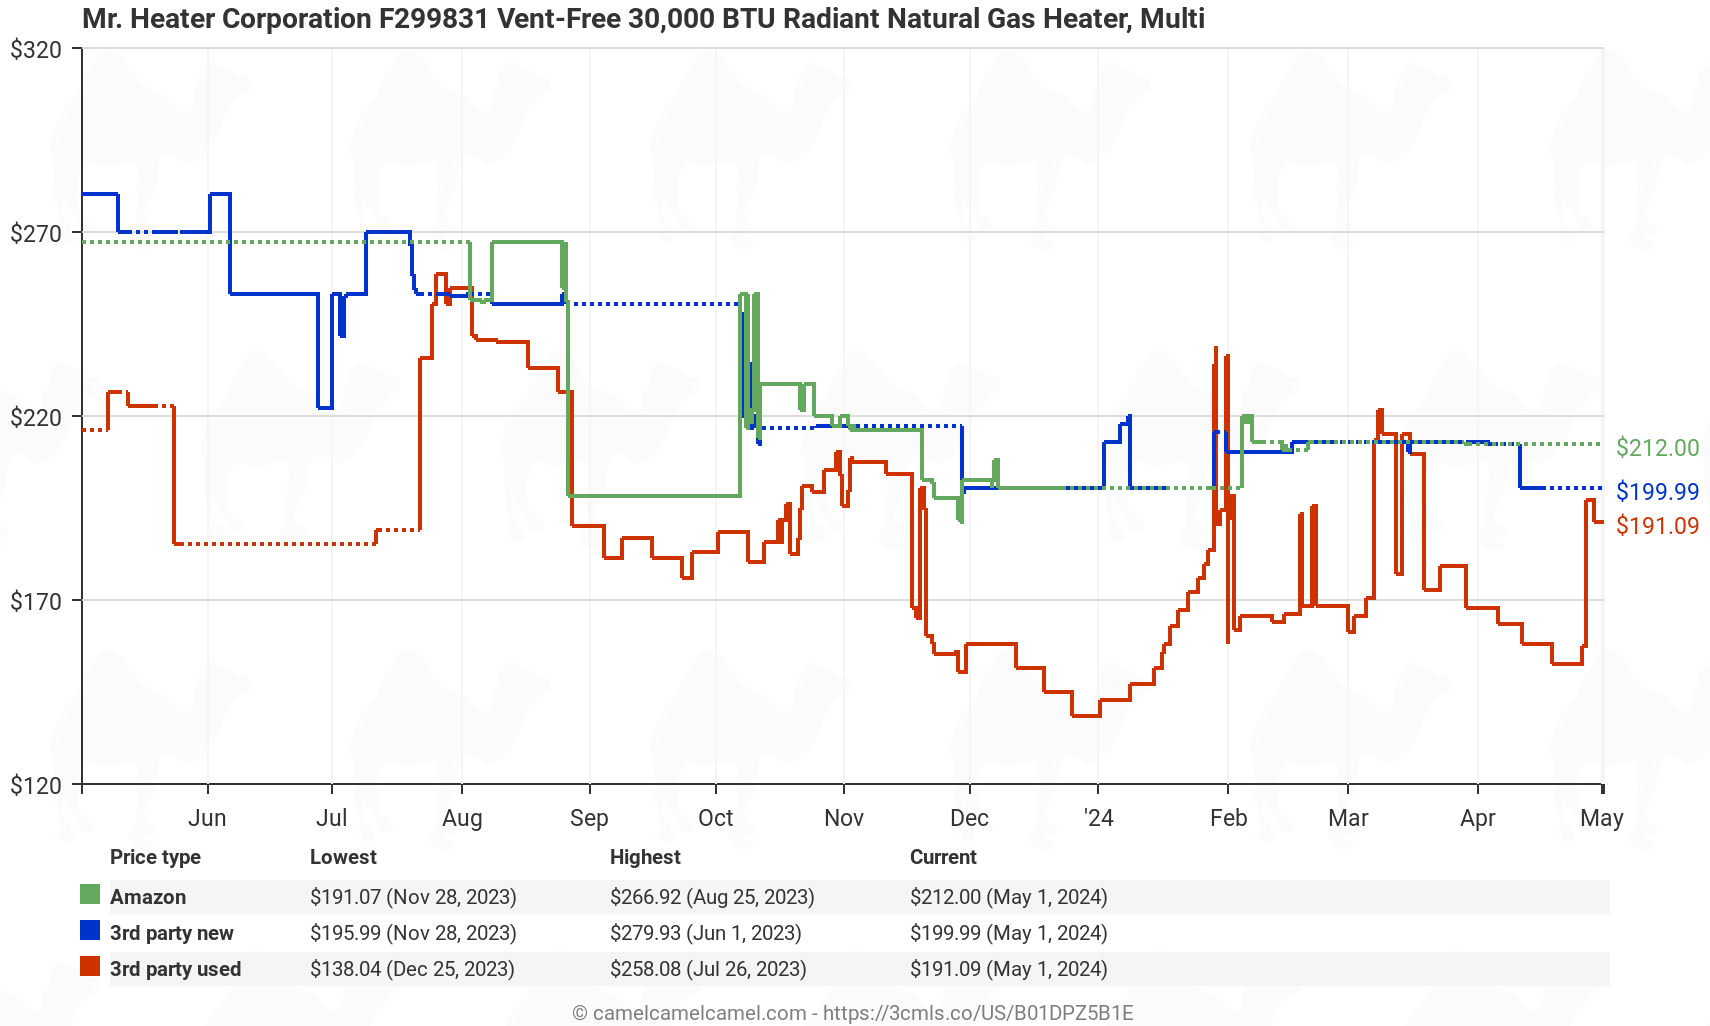 Mr. Heater Corporation F299831 Vent-Free 30,000 BTU Radiant Natural Gas Heater, Multi - Price History: B01DPZ5B1E